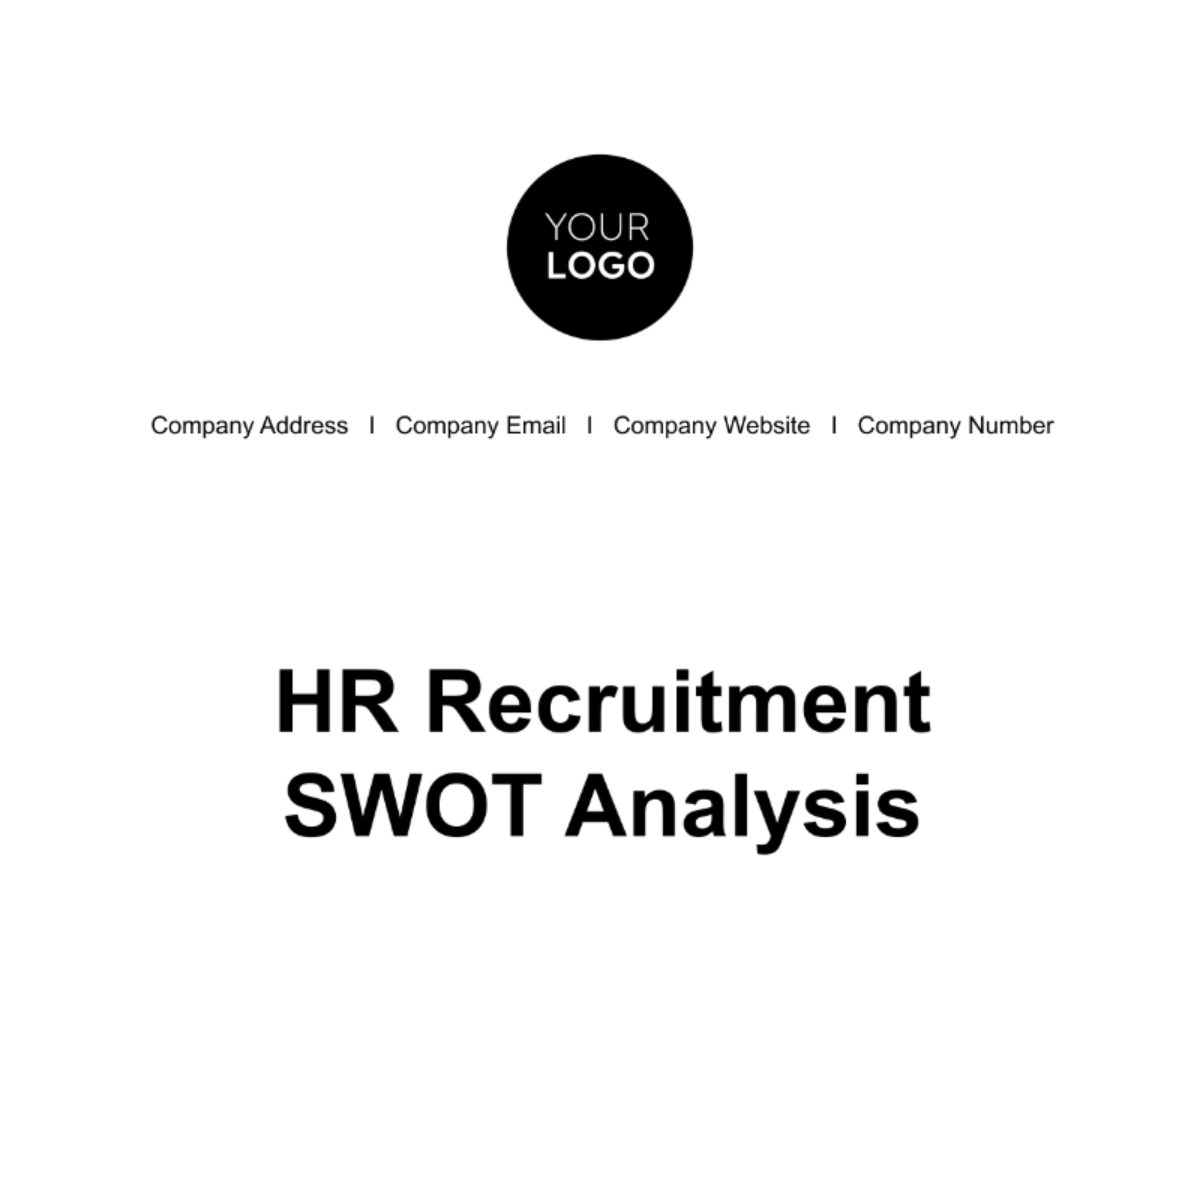 Recruitment SWOT Analysis HR Template